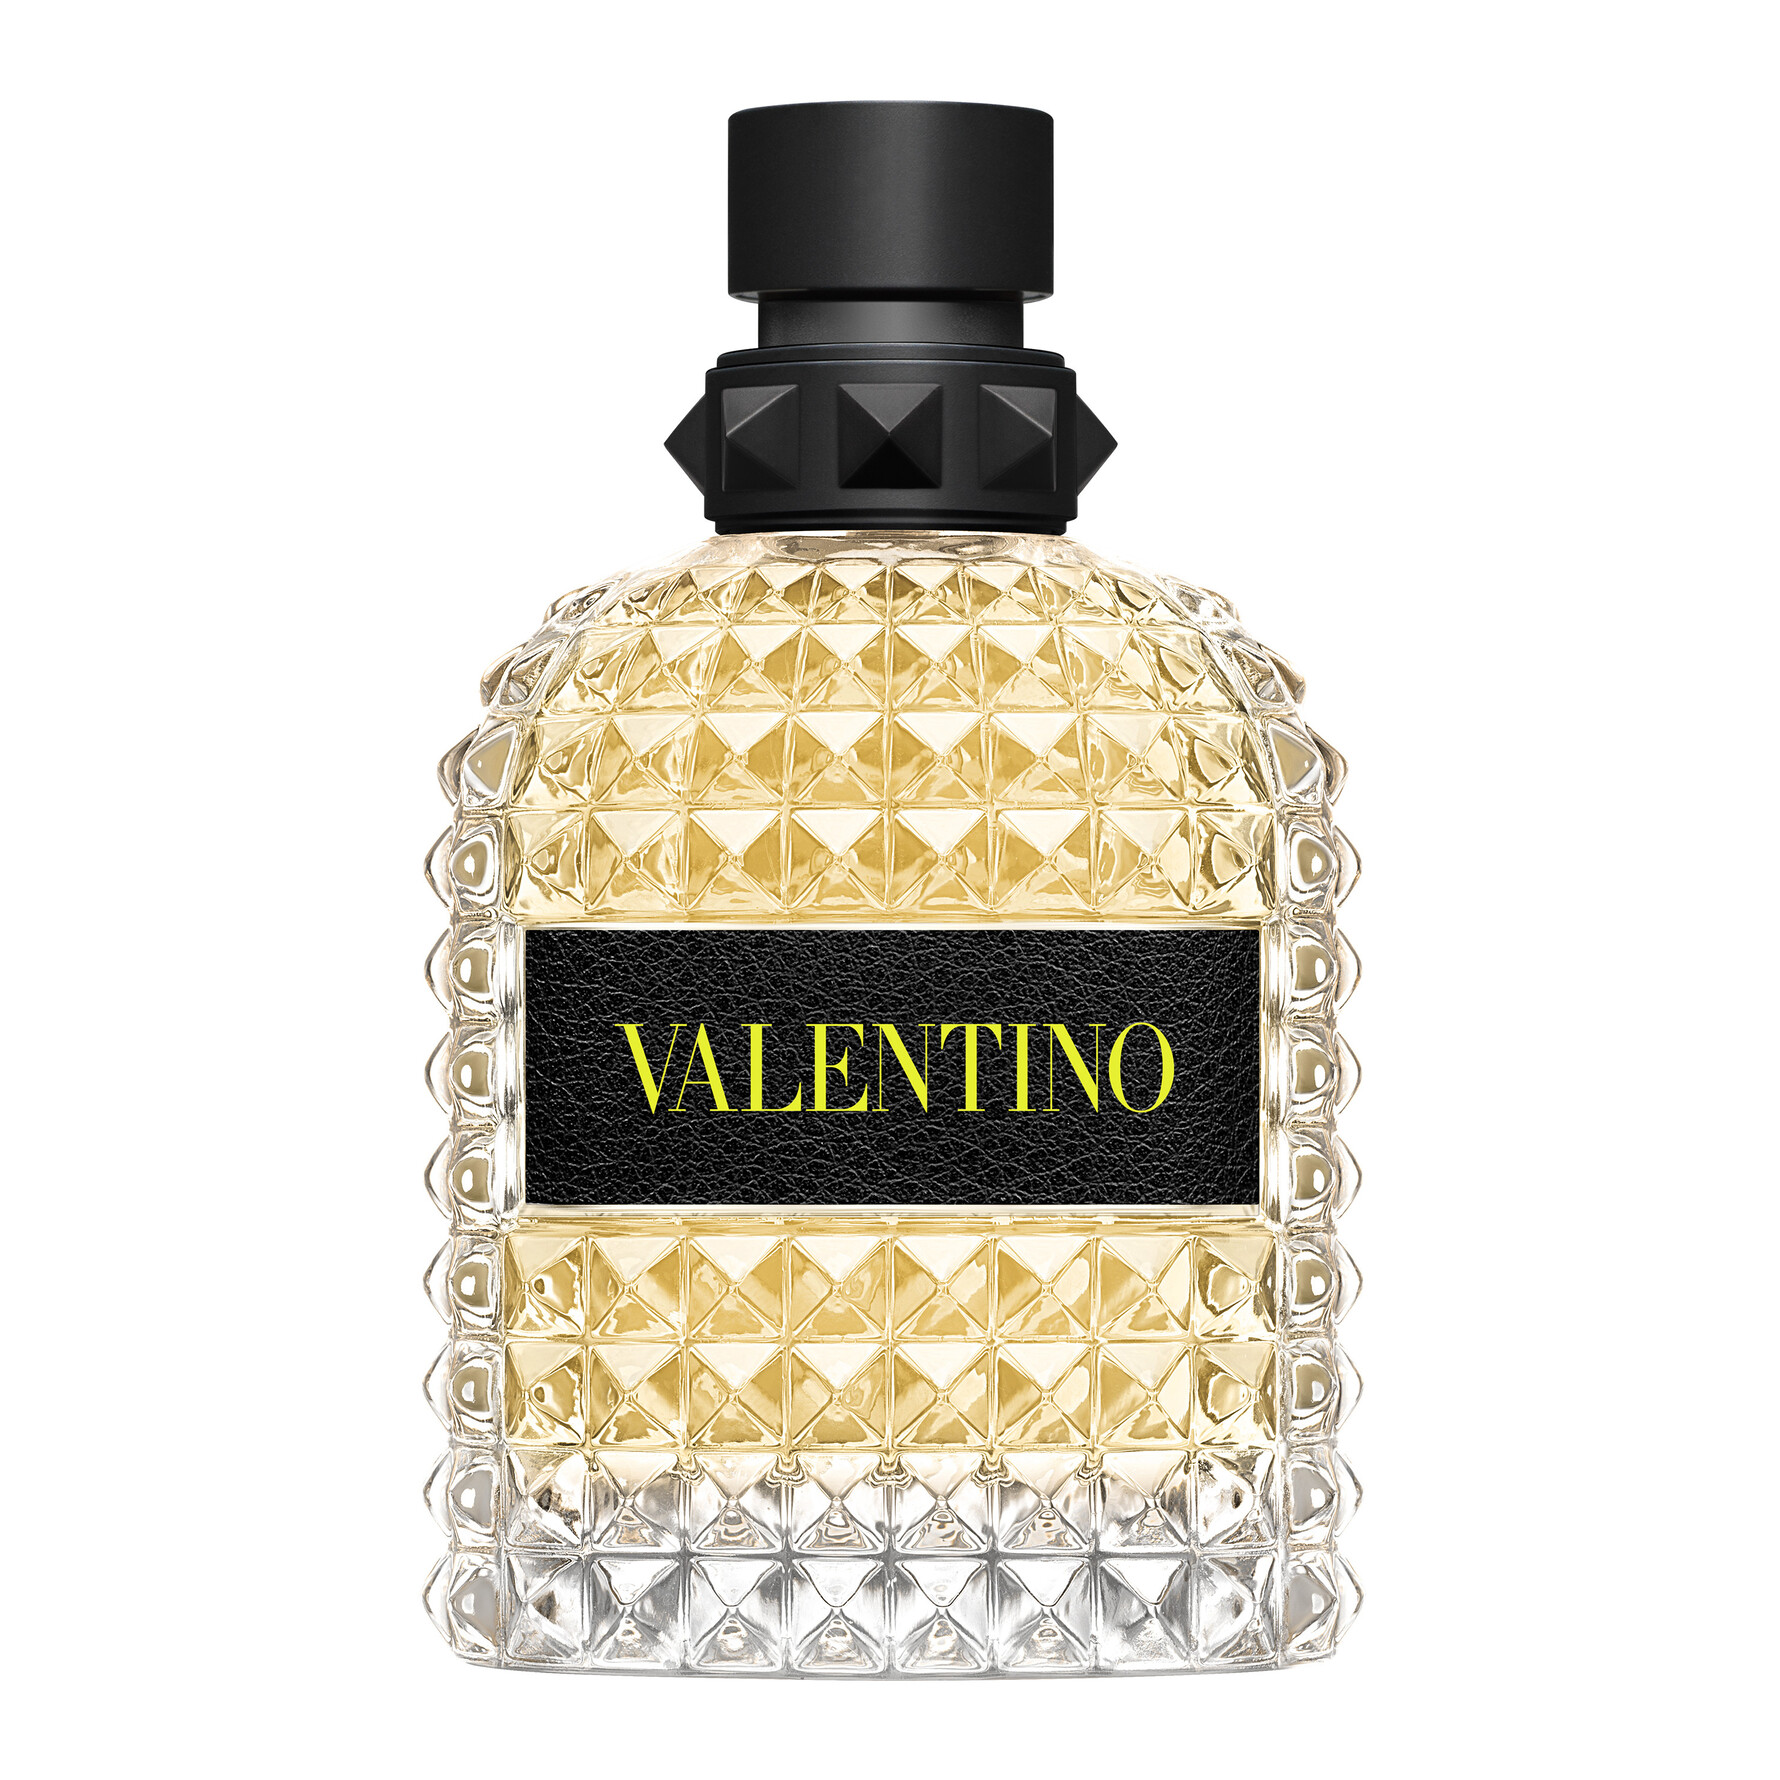 Ananiver Opera tofu Valentino parfume - Se tilbud og køb hos Matas